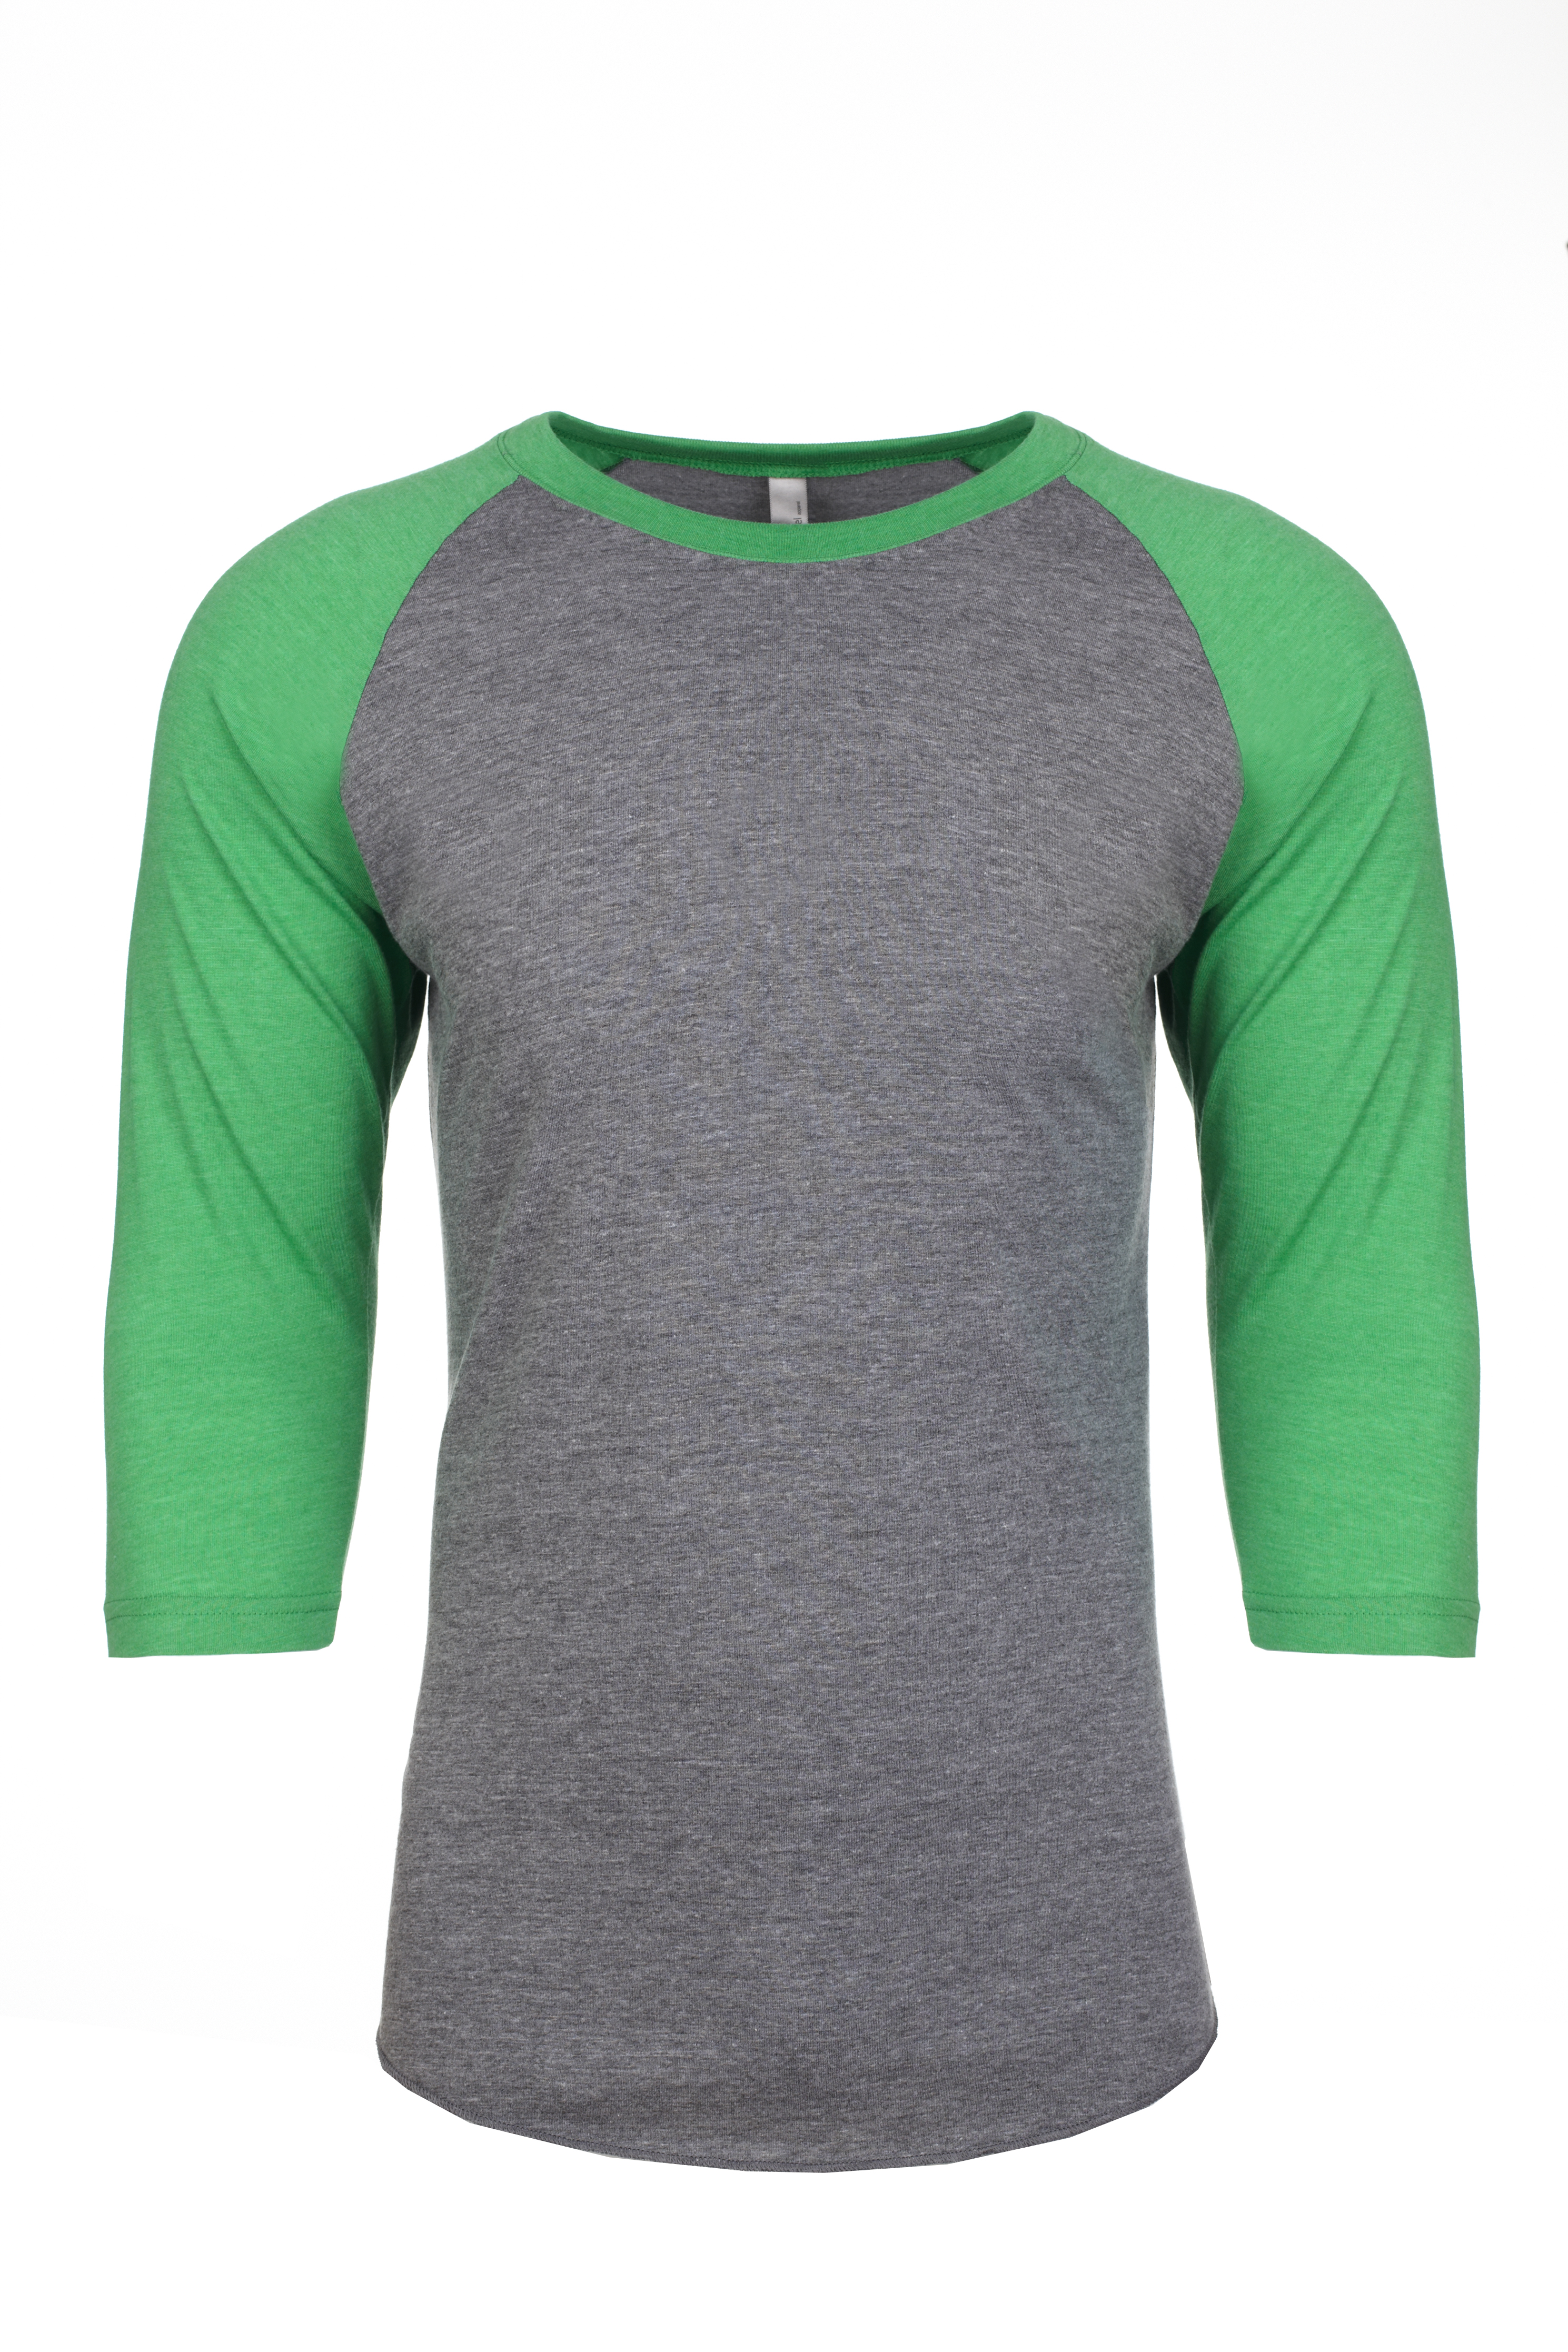 Next Level Apparel® 6051 Unisex Tri-Blend 3/4 Raglan T-Shirt